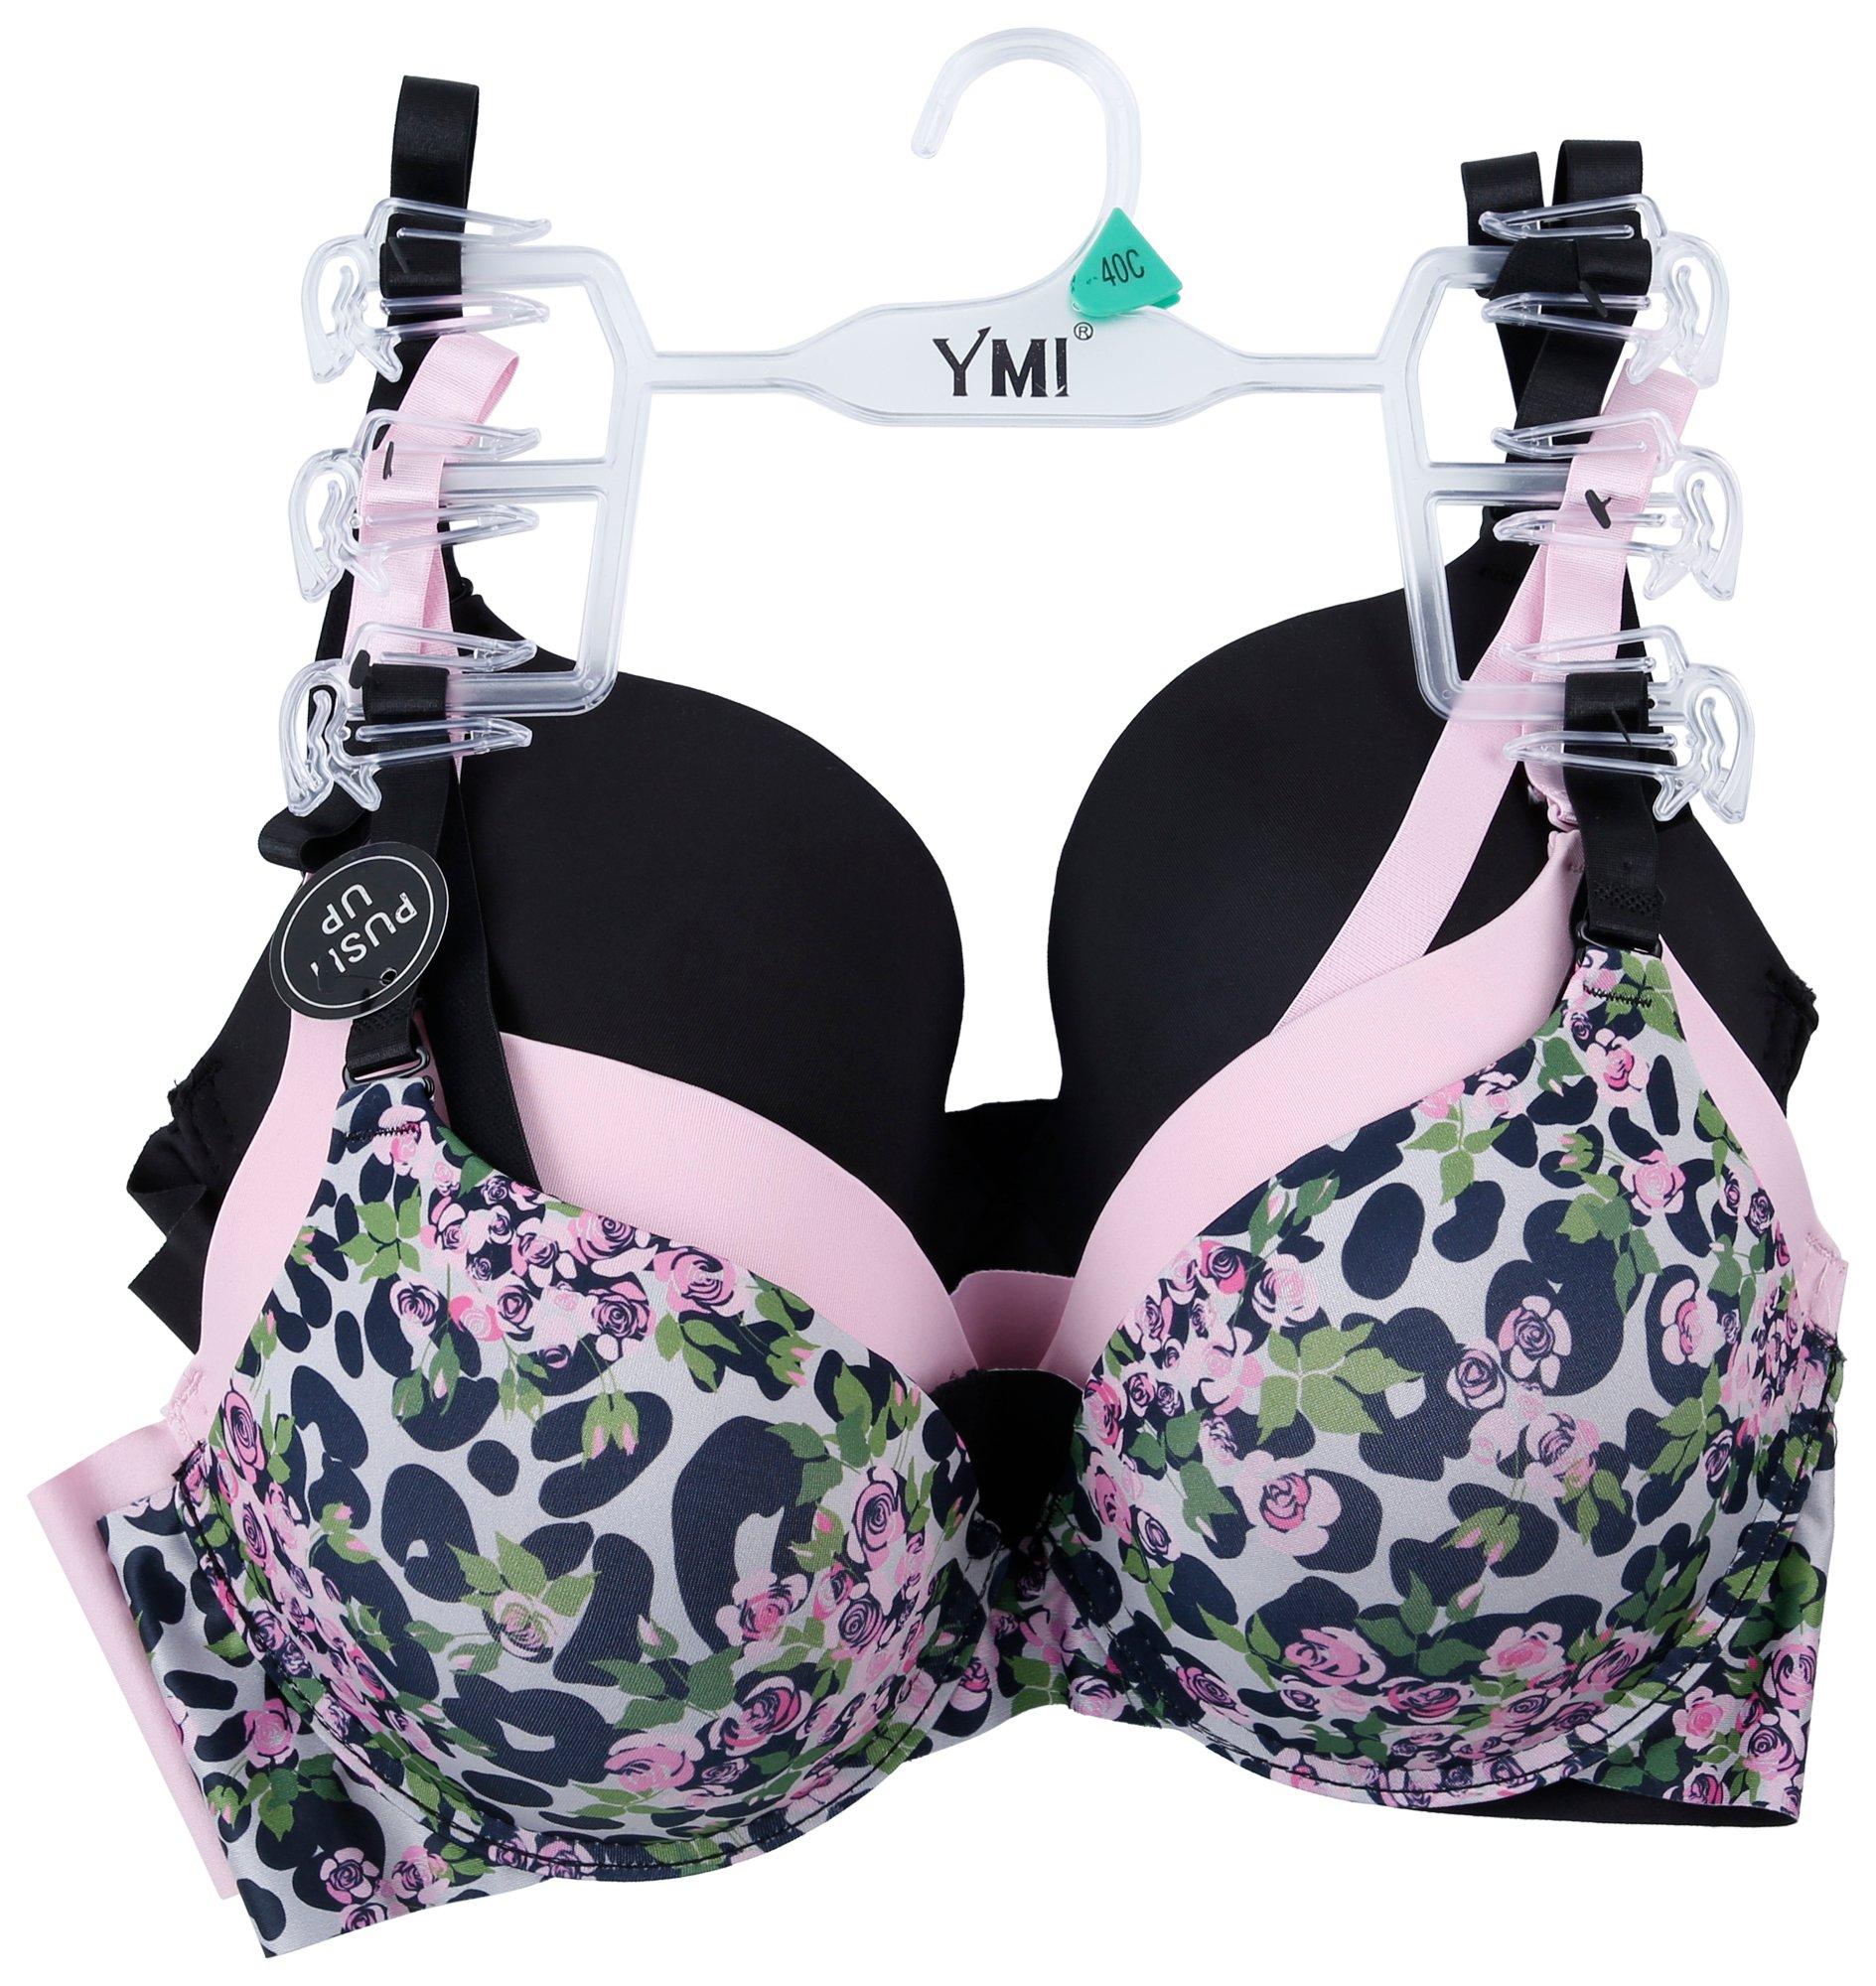 YMI, Intimates & Sleepwear, Ymi Intimates 38b Bra Set Gray And Pink Wired